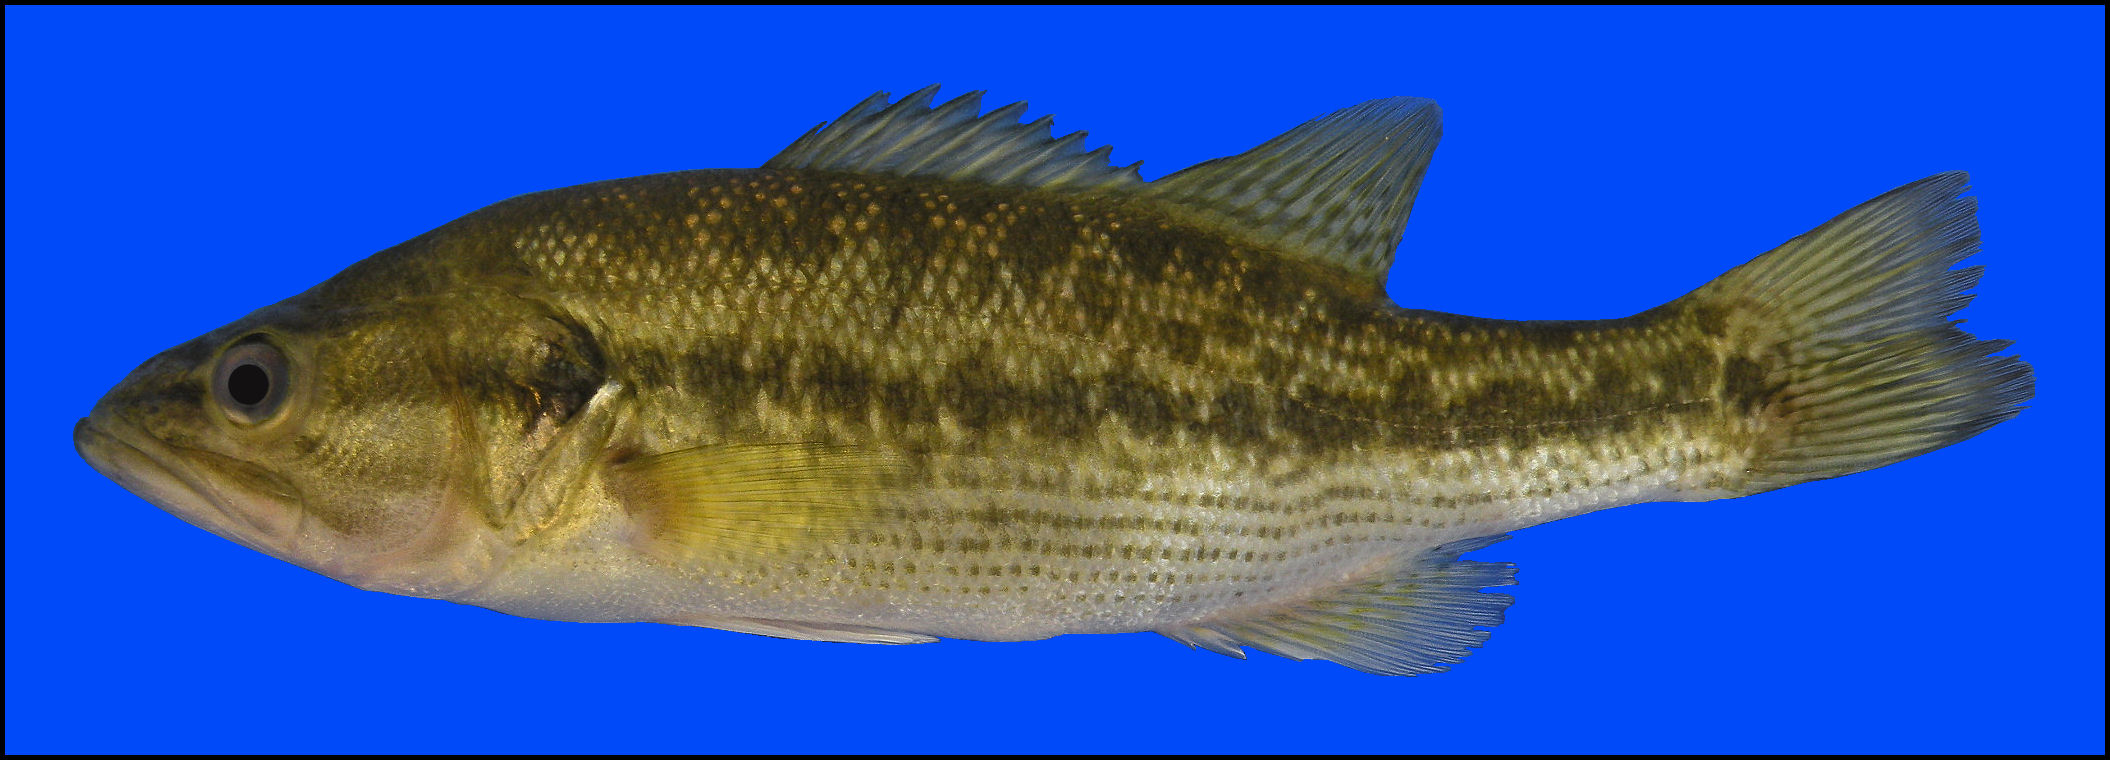 spotted bass Micropterus punctulatus